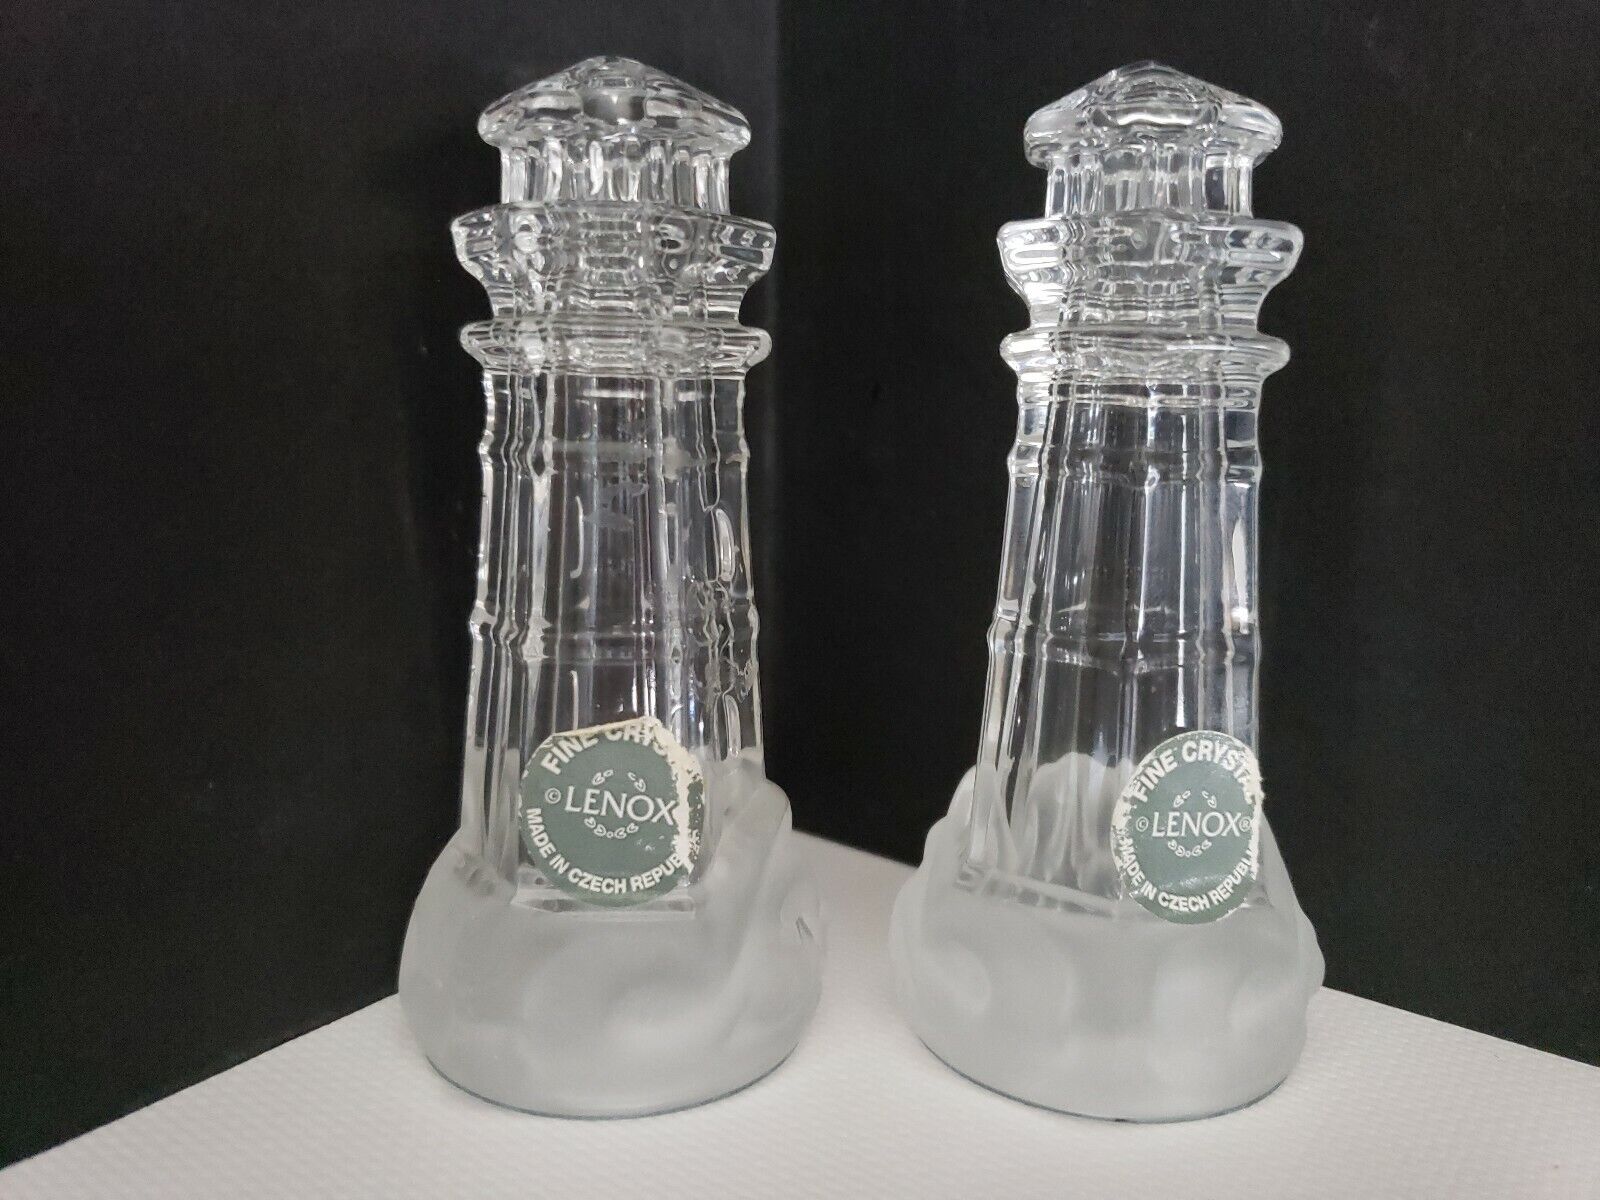 Lenox Crystal Salt & Pepper Sets - Lighthouse - DISCONTINUED - 2 pc lot Lenox